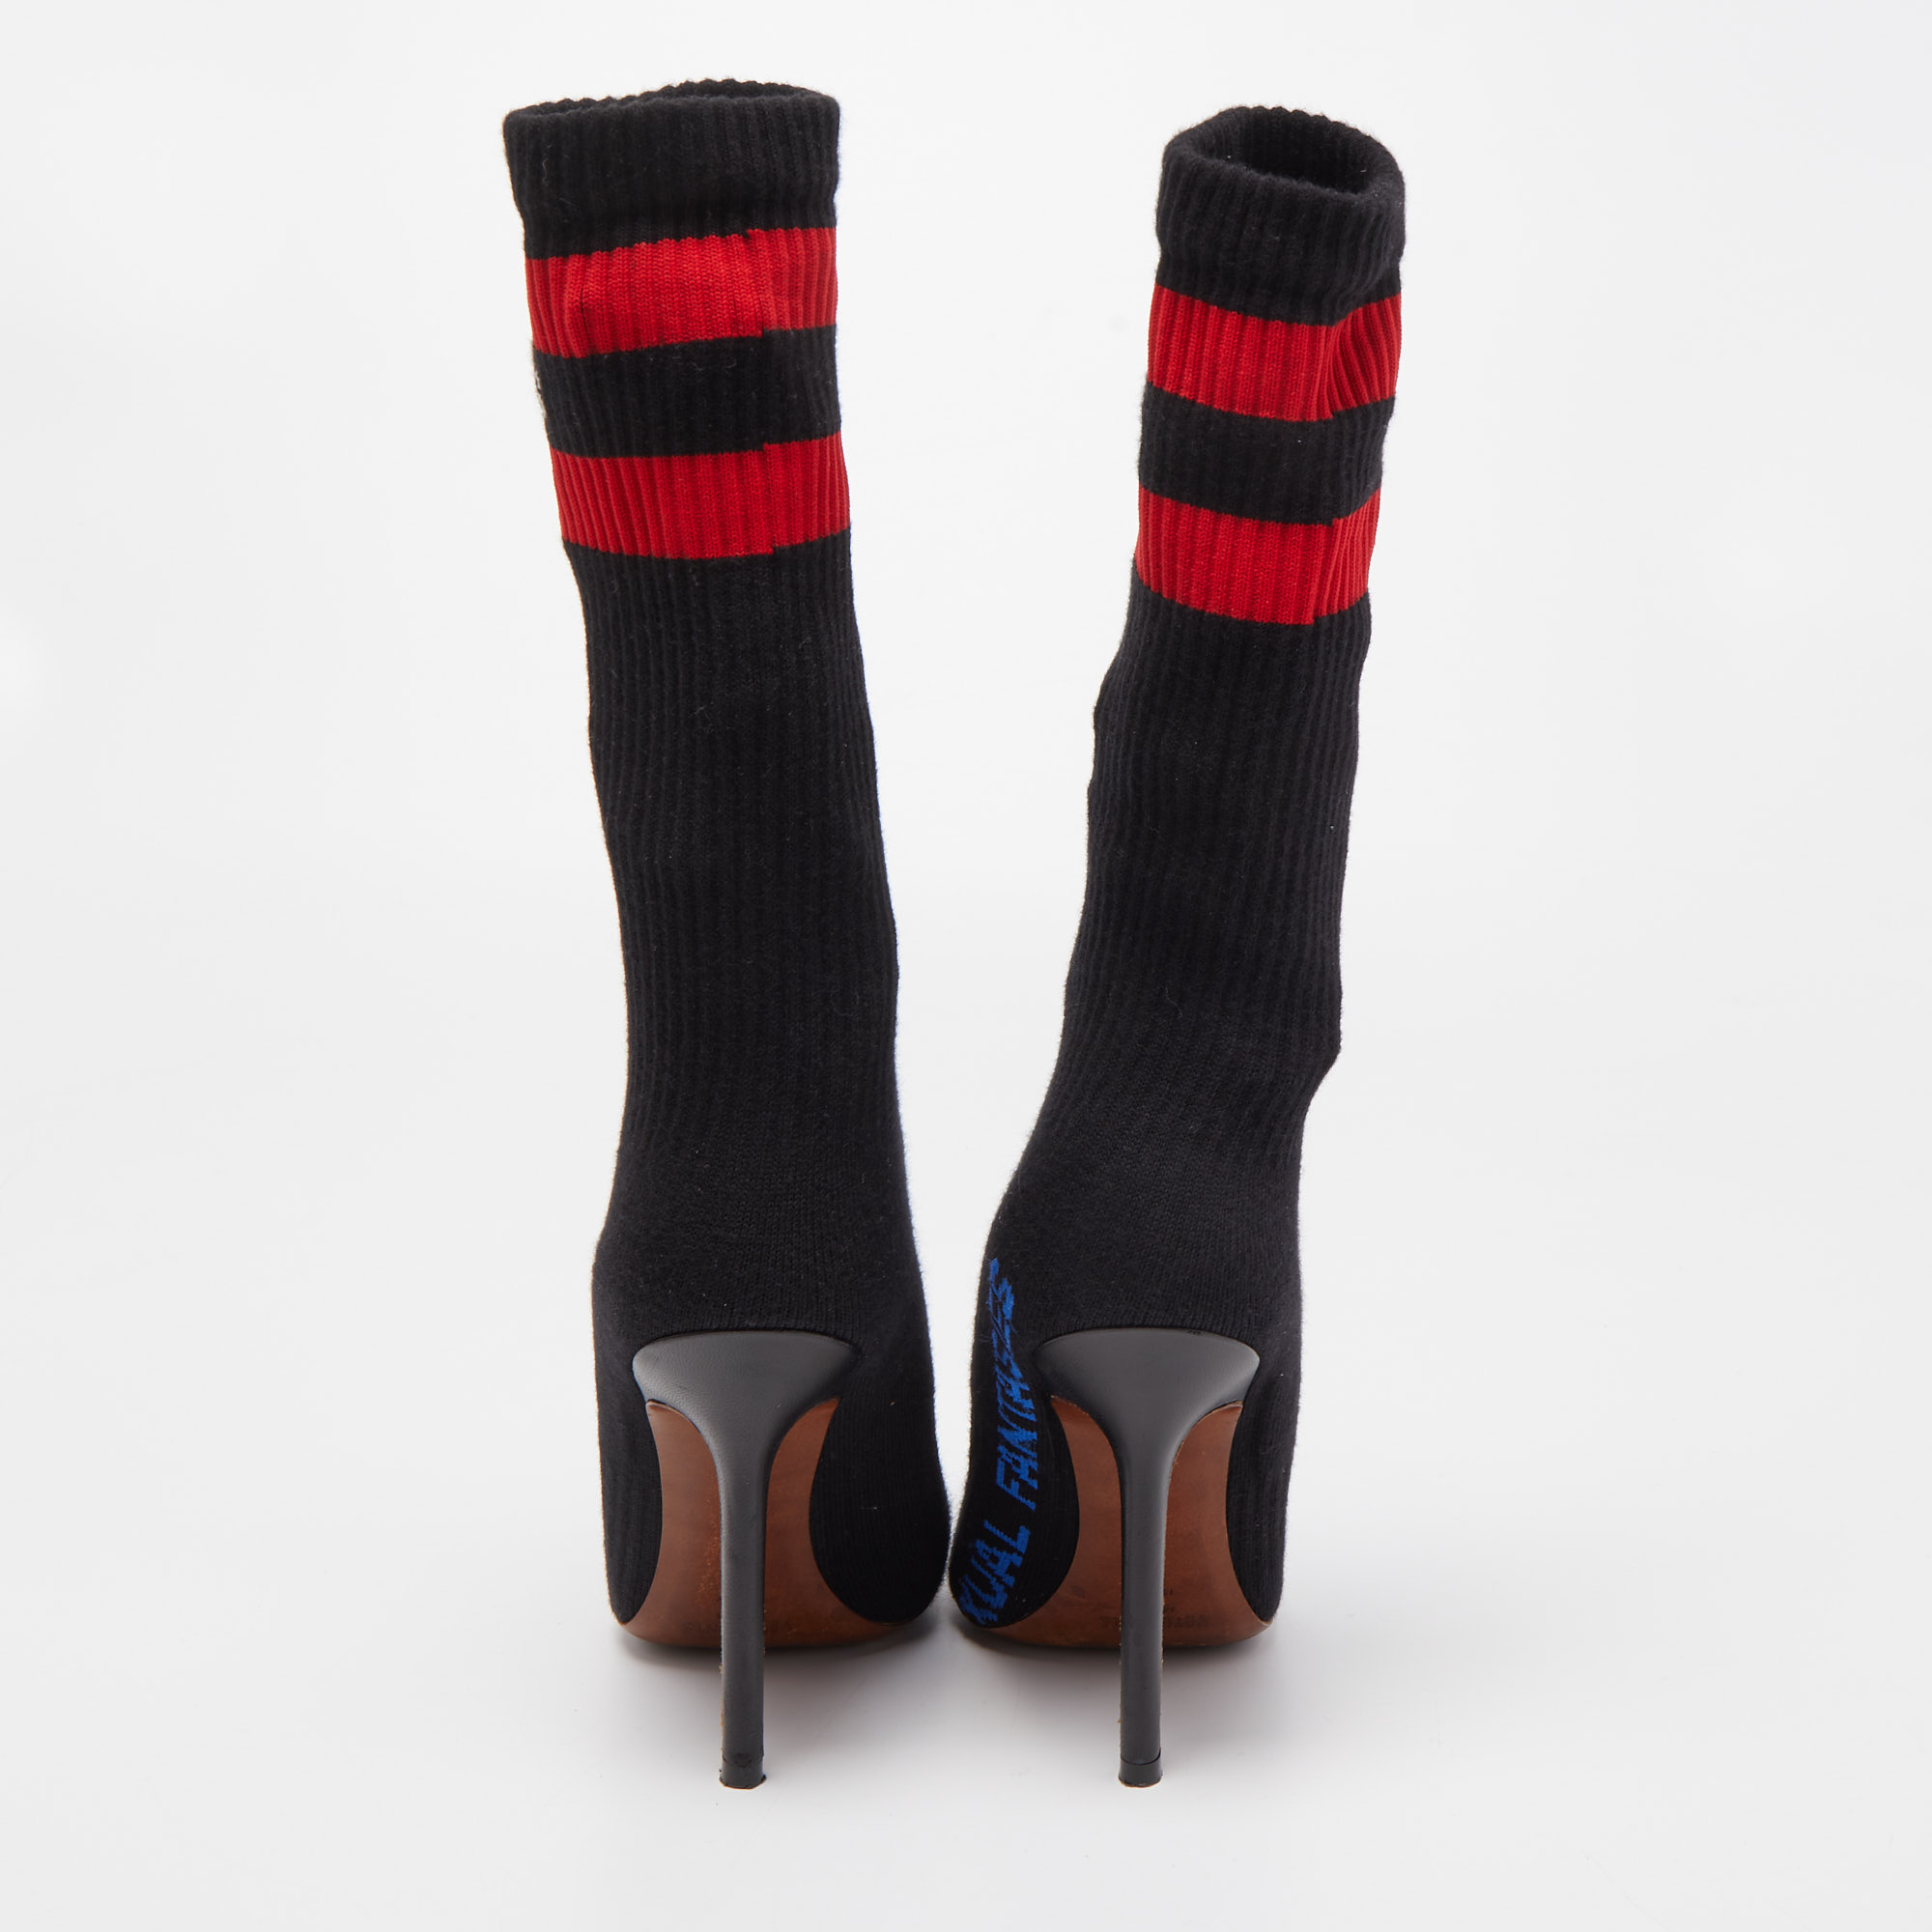 Louis Vuitton Blue/Black Knit Fabric Sock Boots Size 37